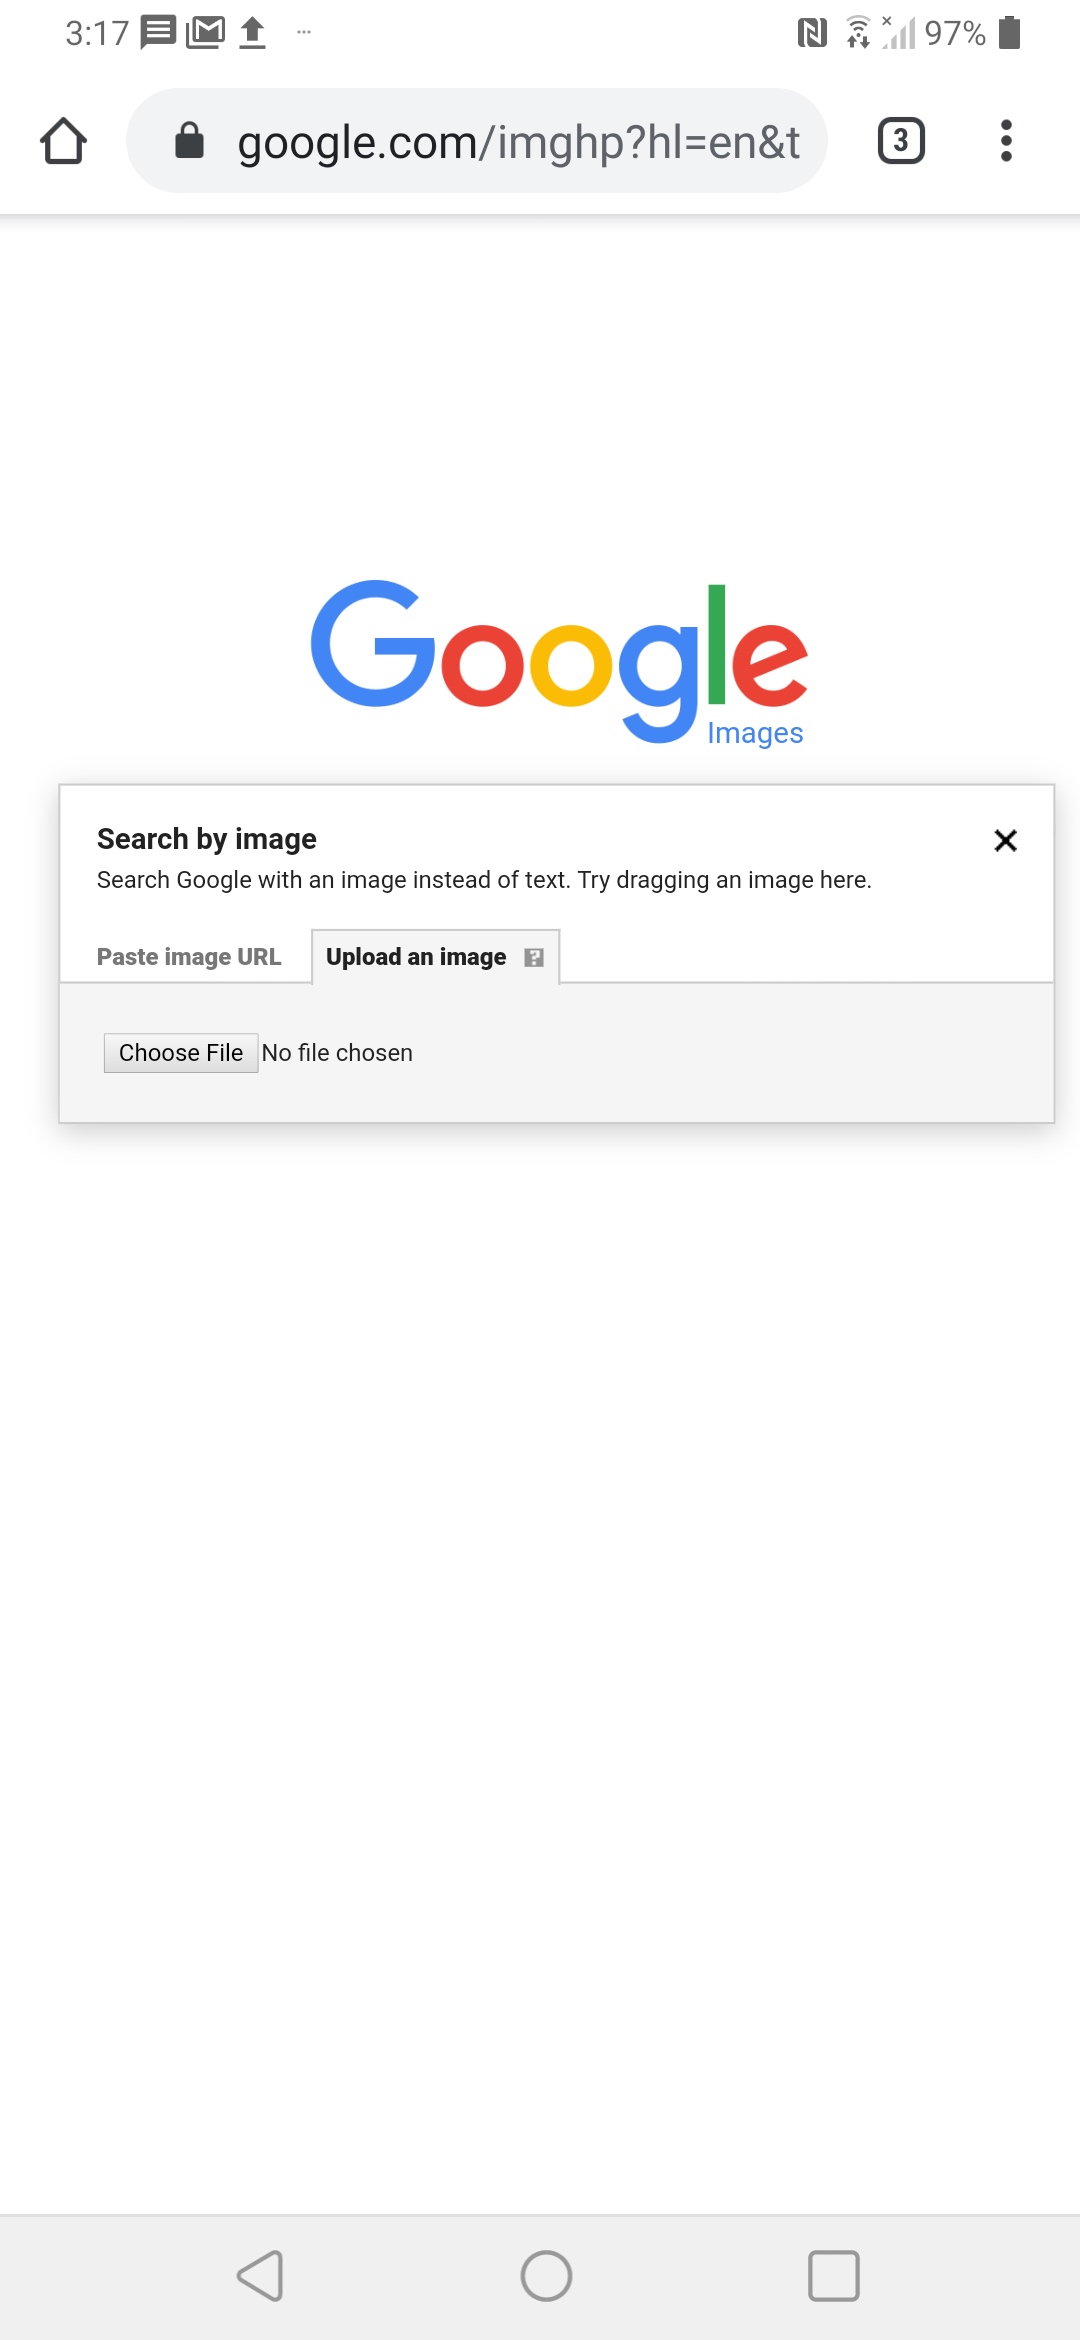 Passaggio 1: Vai su images.google.com nel tuo browser.